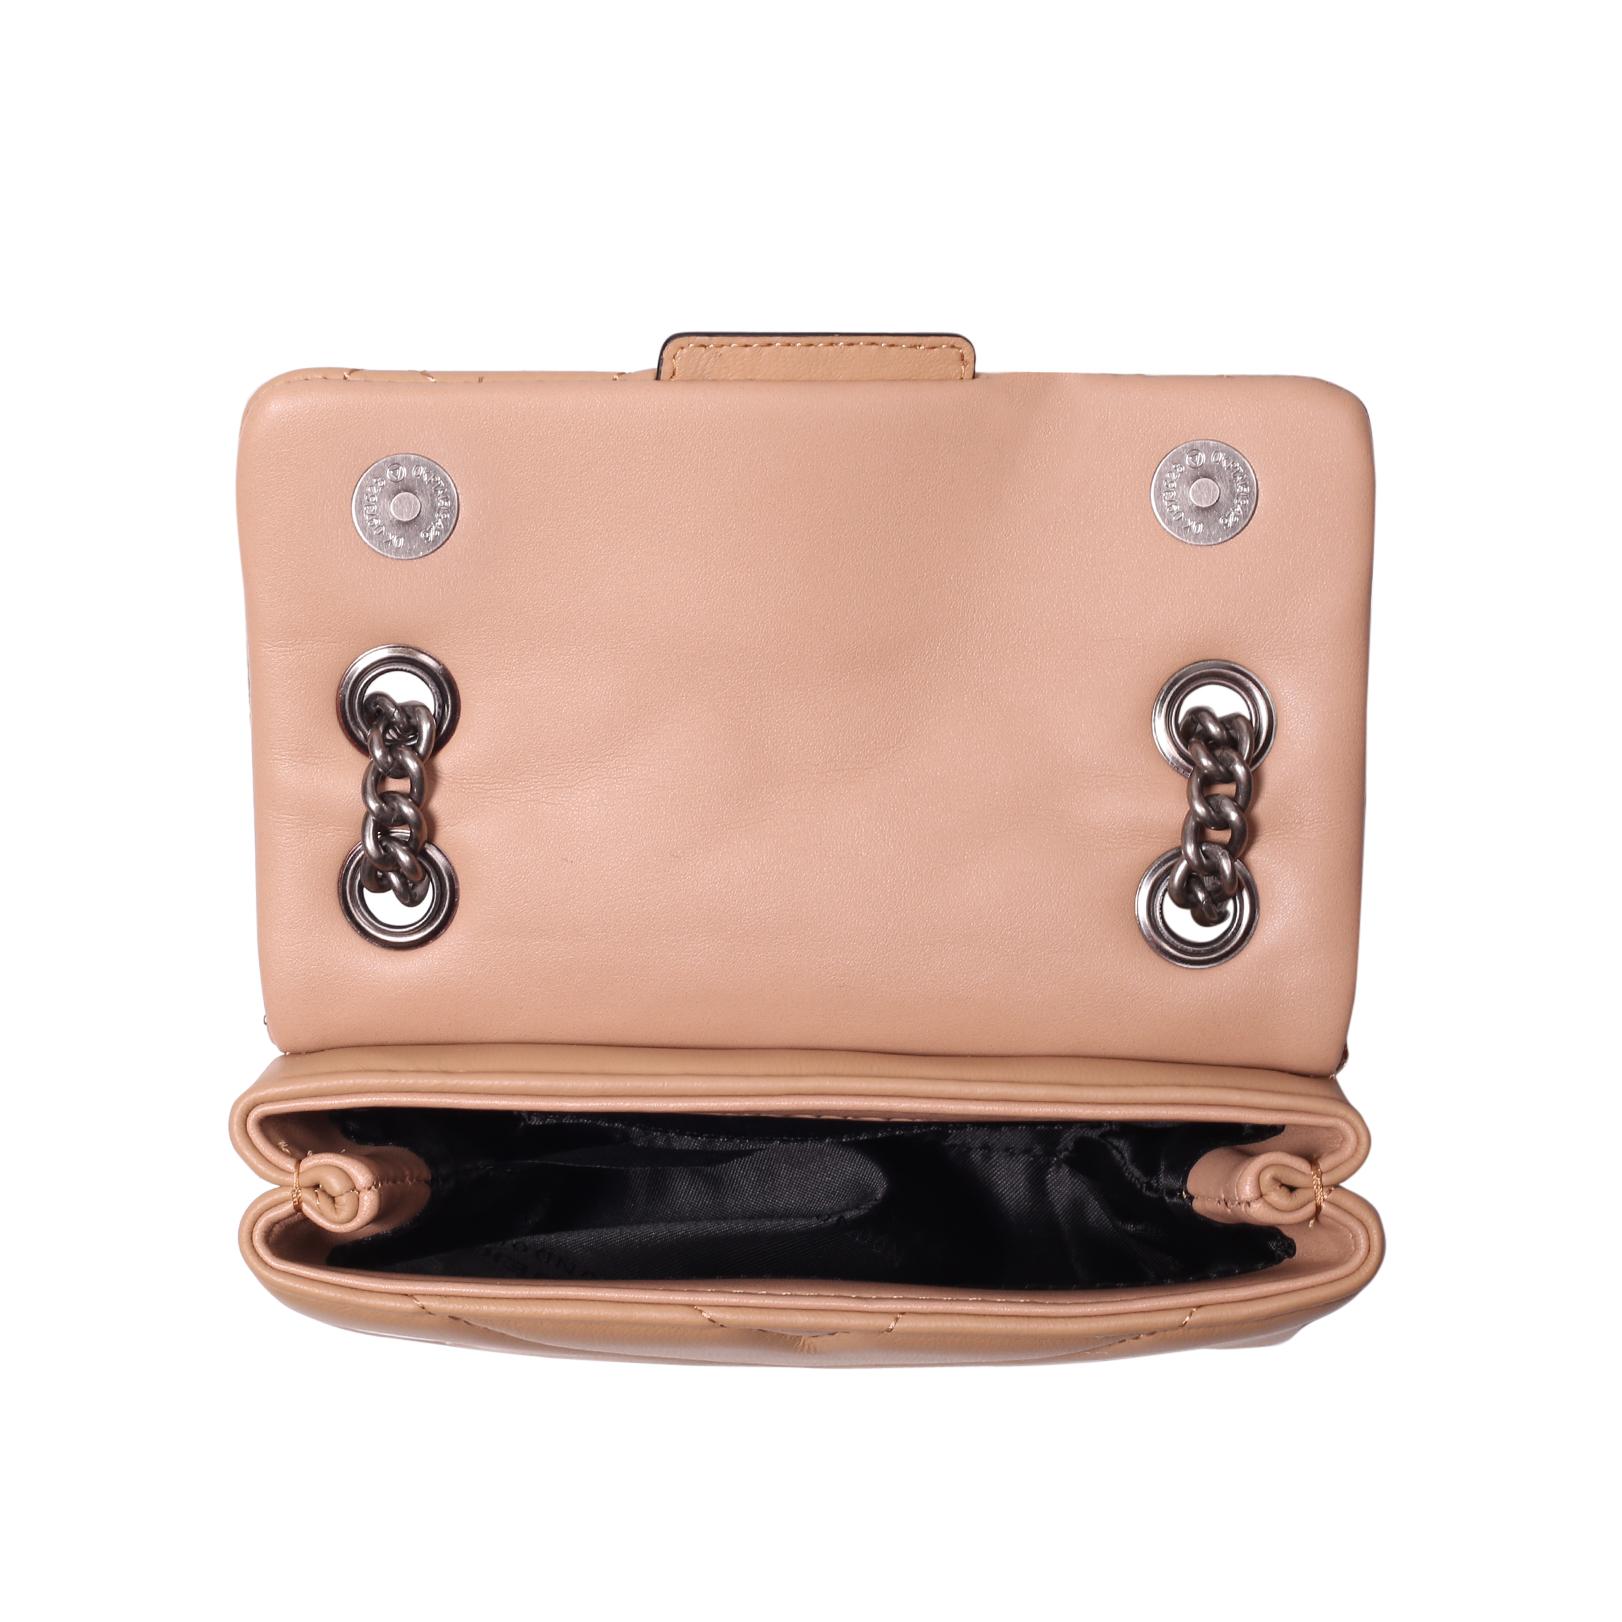 MINI KENSINGTON X BAG Camel Quilted Leather Mini Bag by KURT GEIGER LONDON